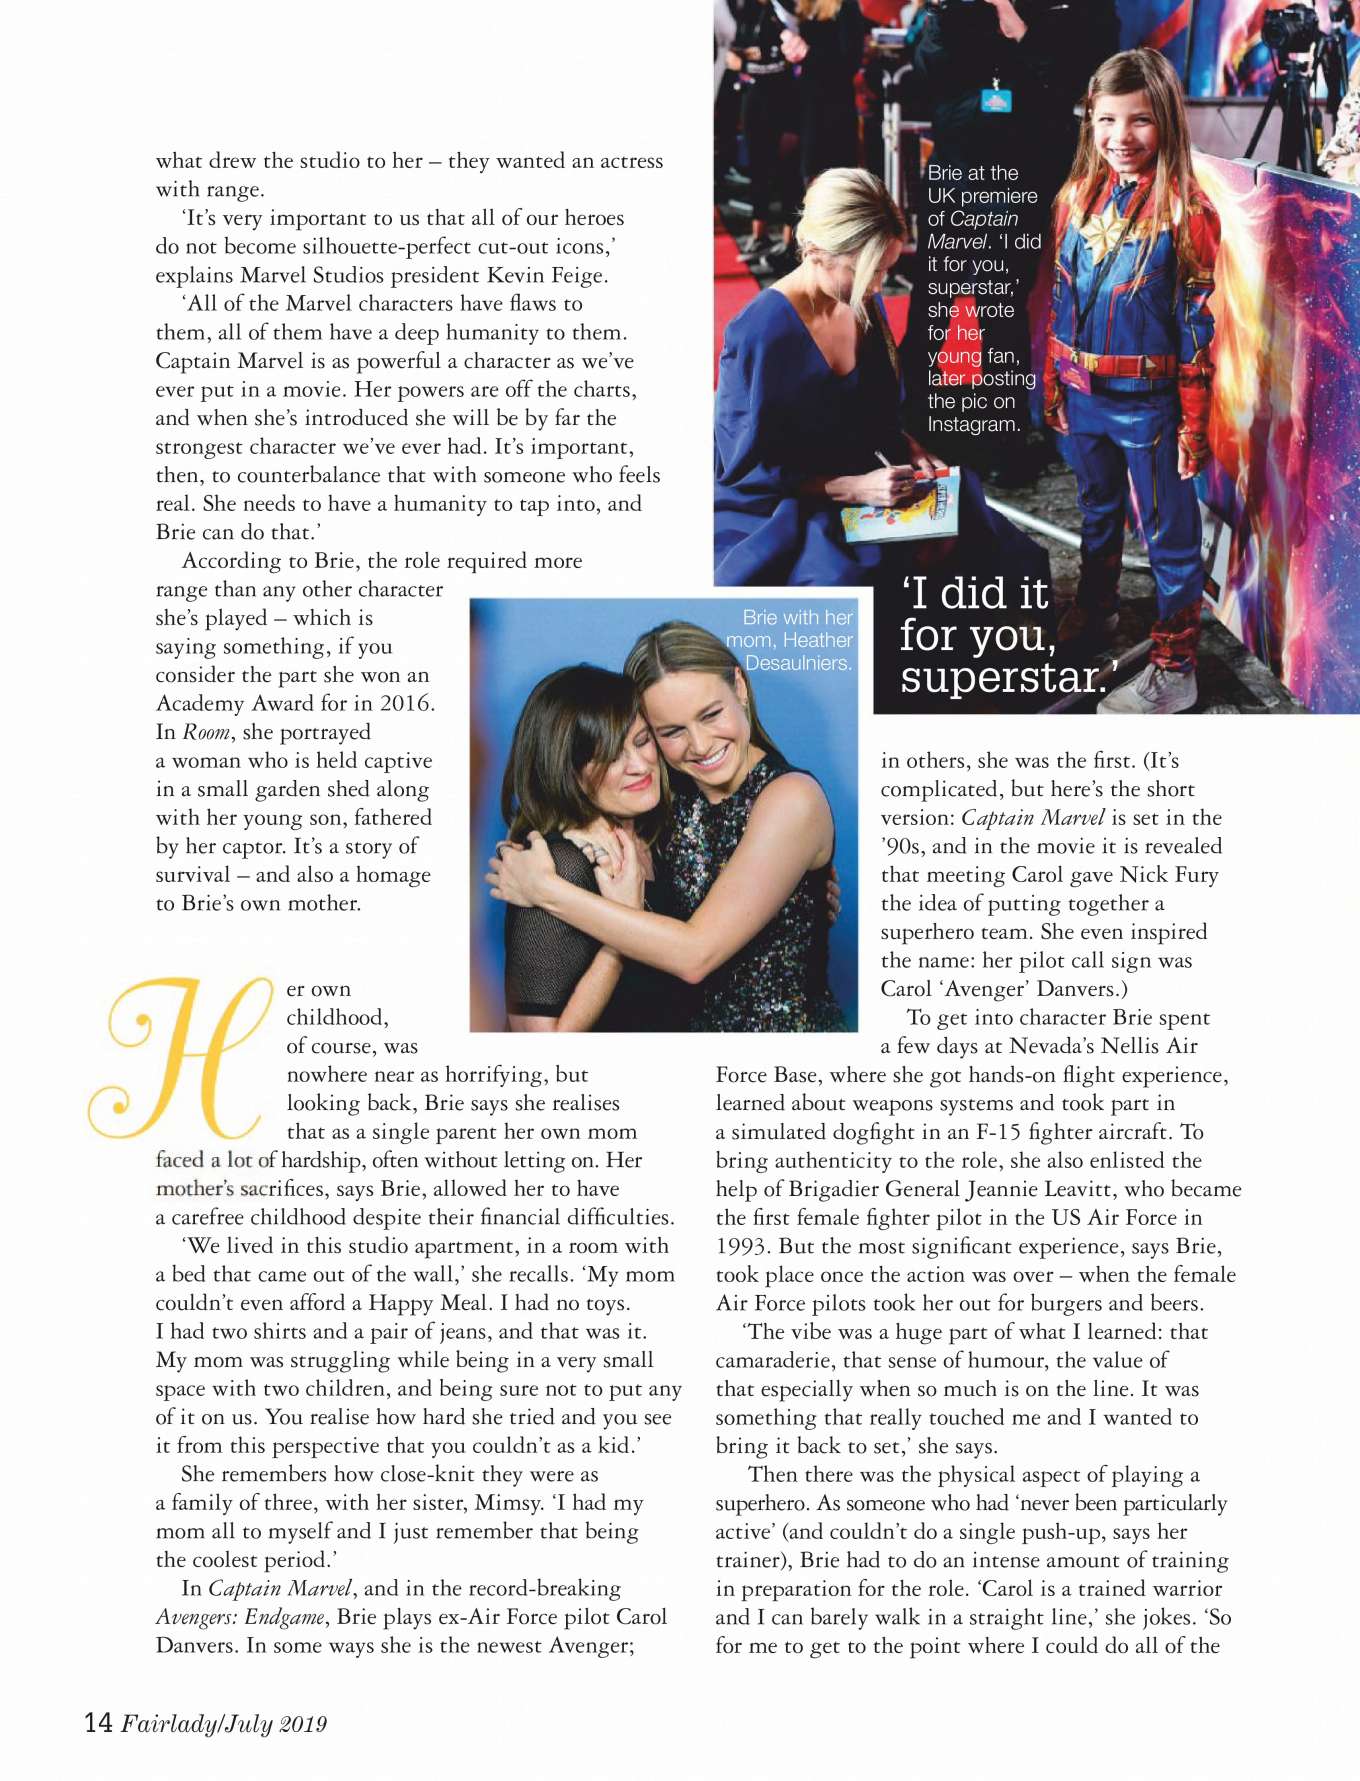 Brie Larson â€“ Fairlady Magazine (July 2019)